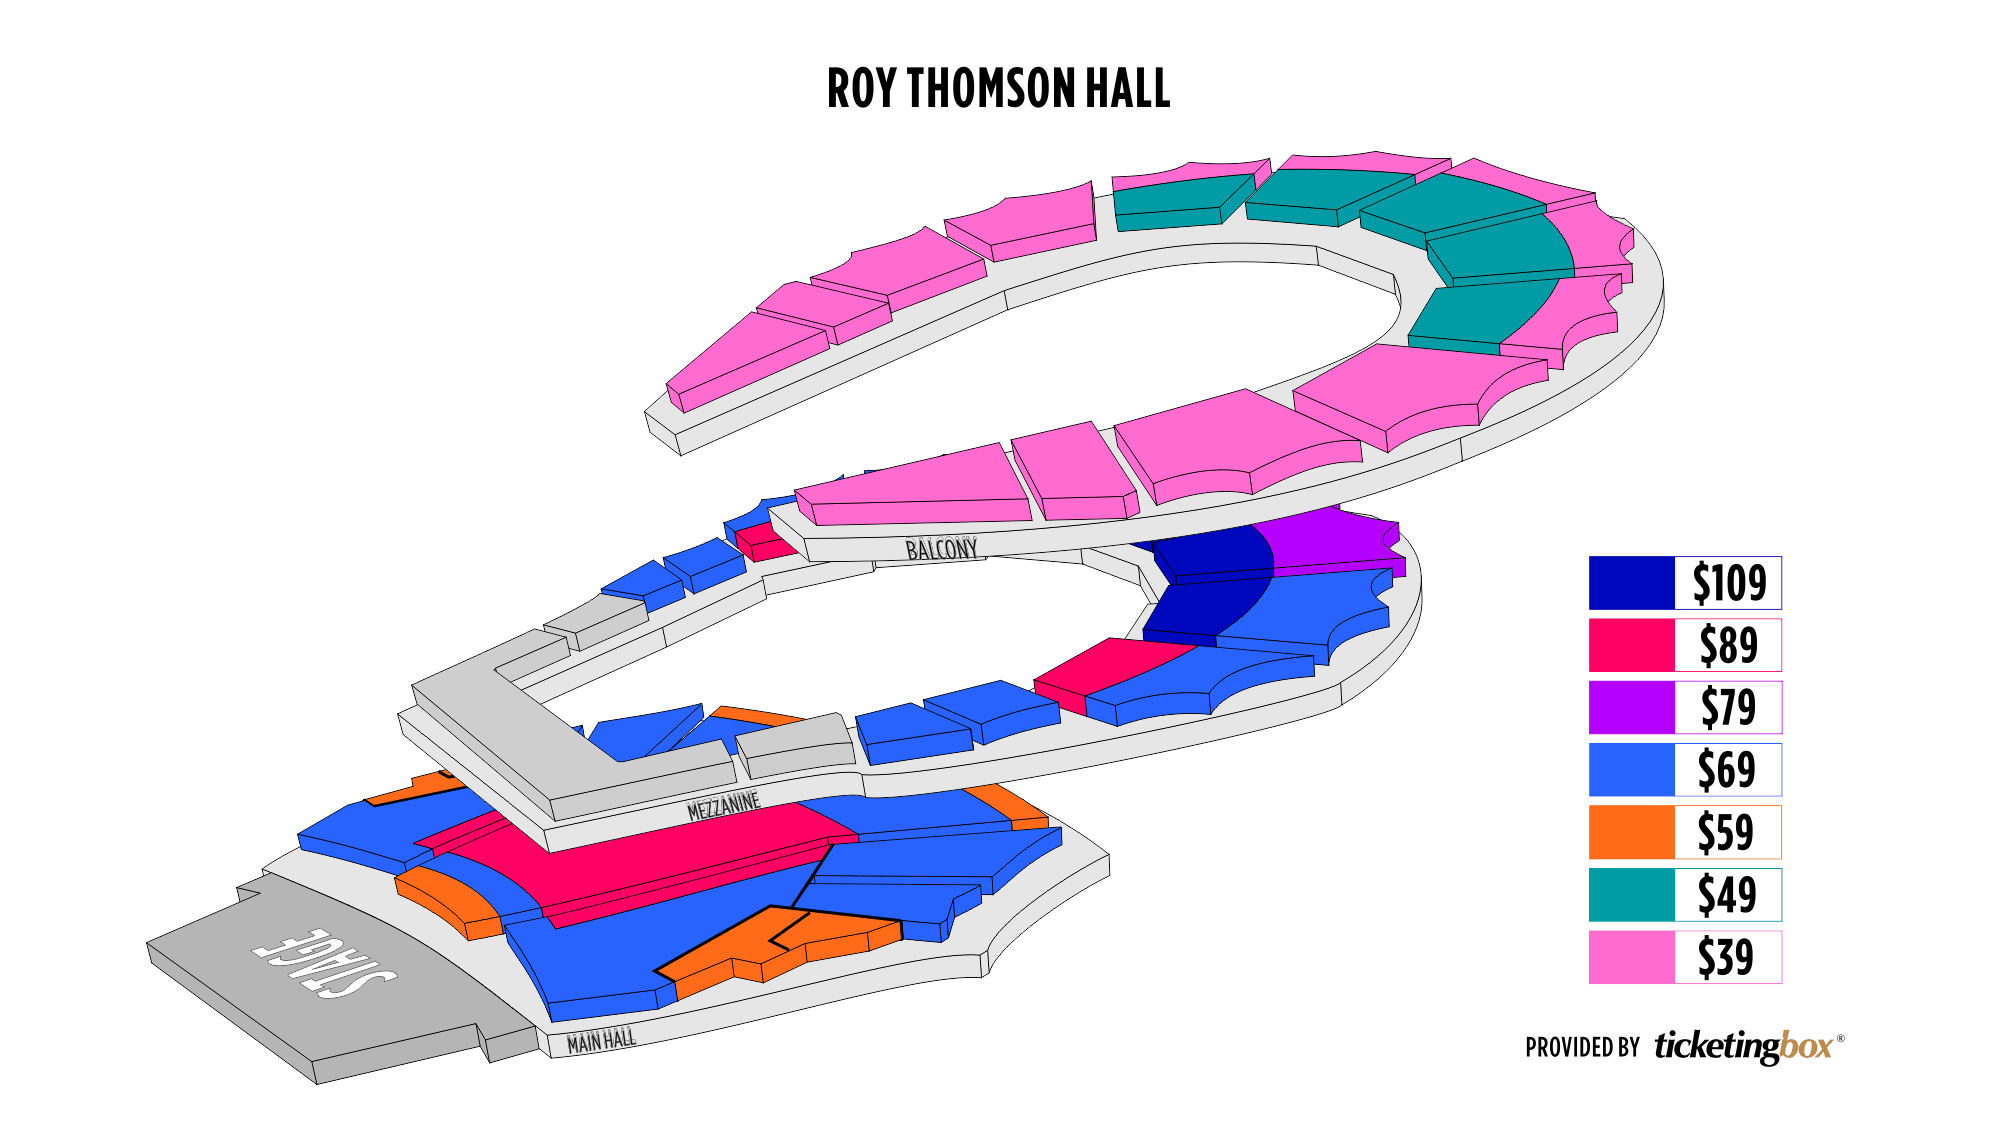 Massey Hall Toronto Seating Chart